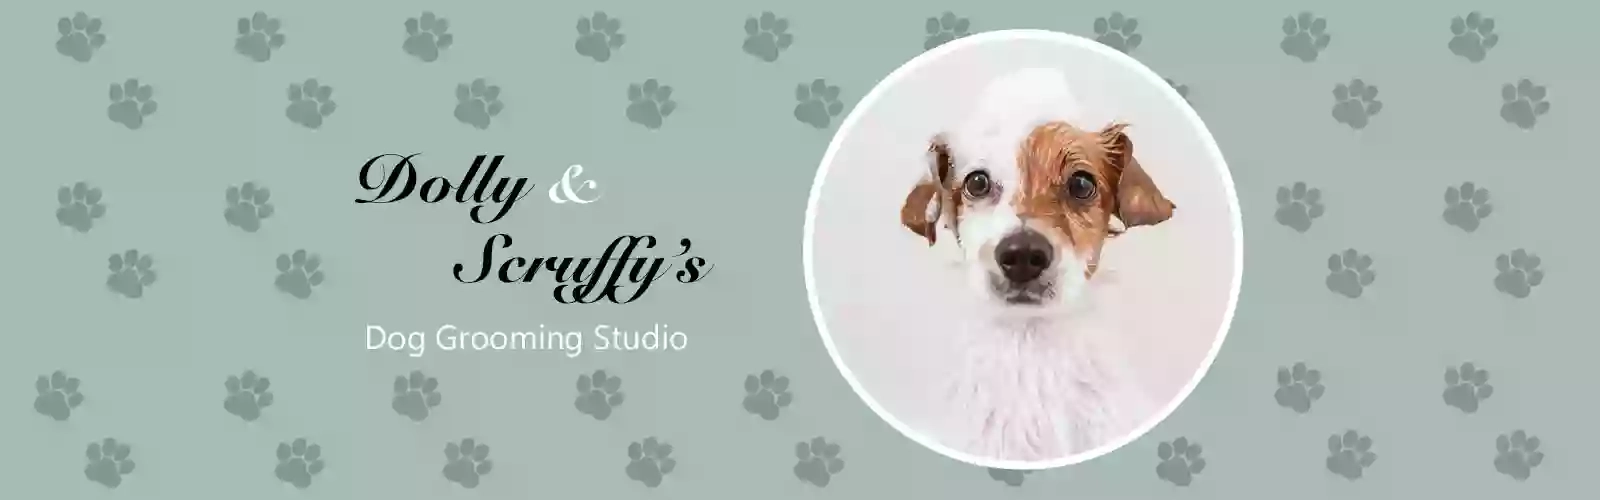 Dolly & Scruffy's Dog Grooming Studio